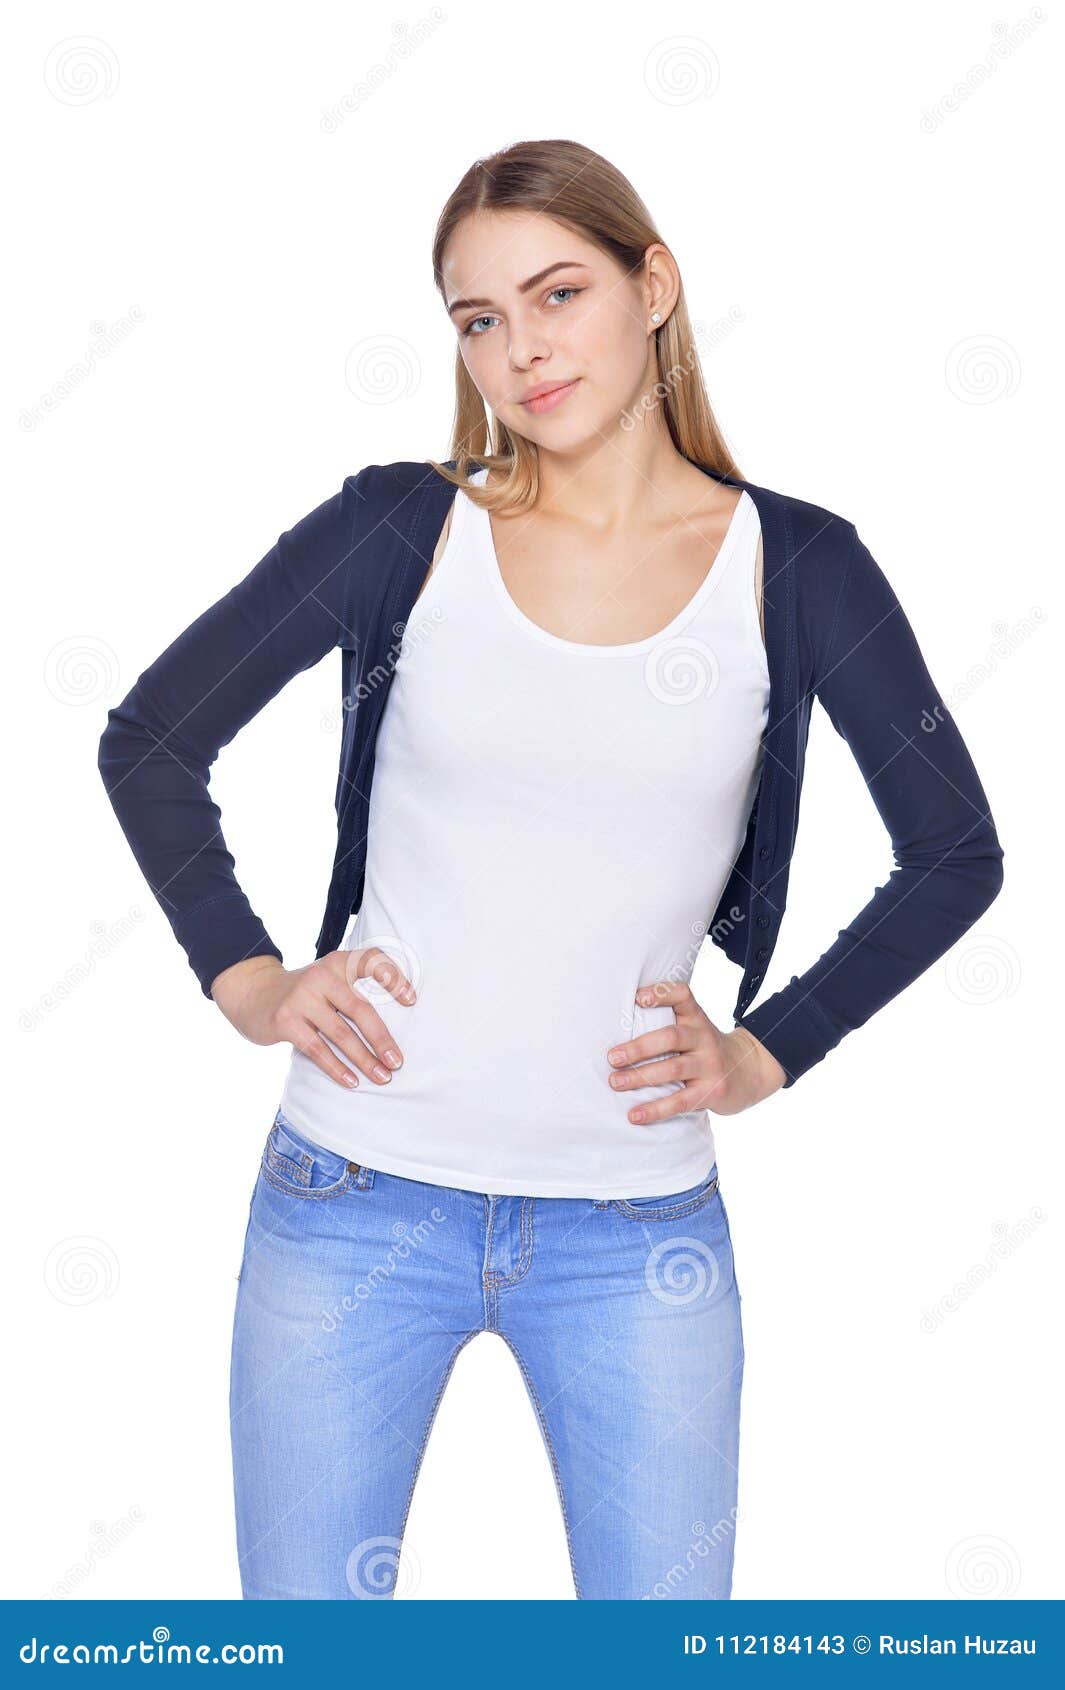 Beautiful Woman in Jeans Posing Stock Image - Image of beautiful, girl ...